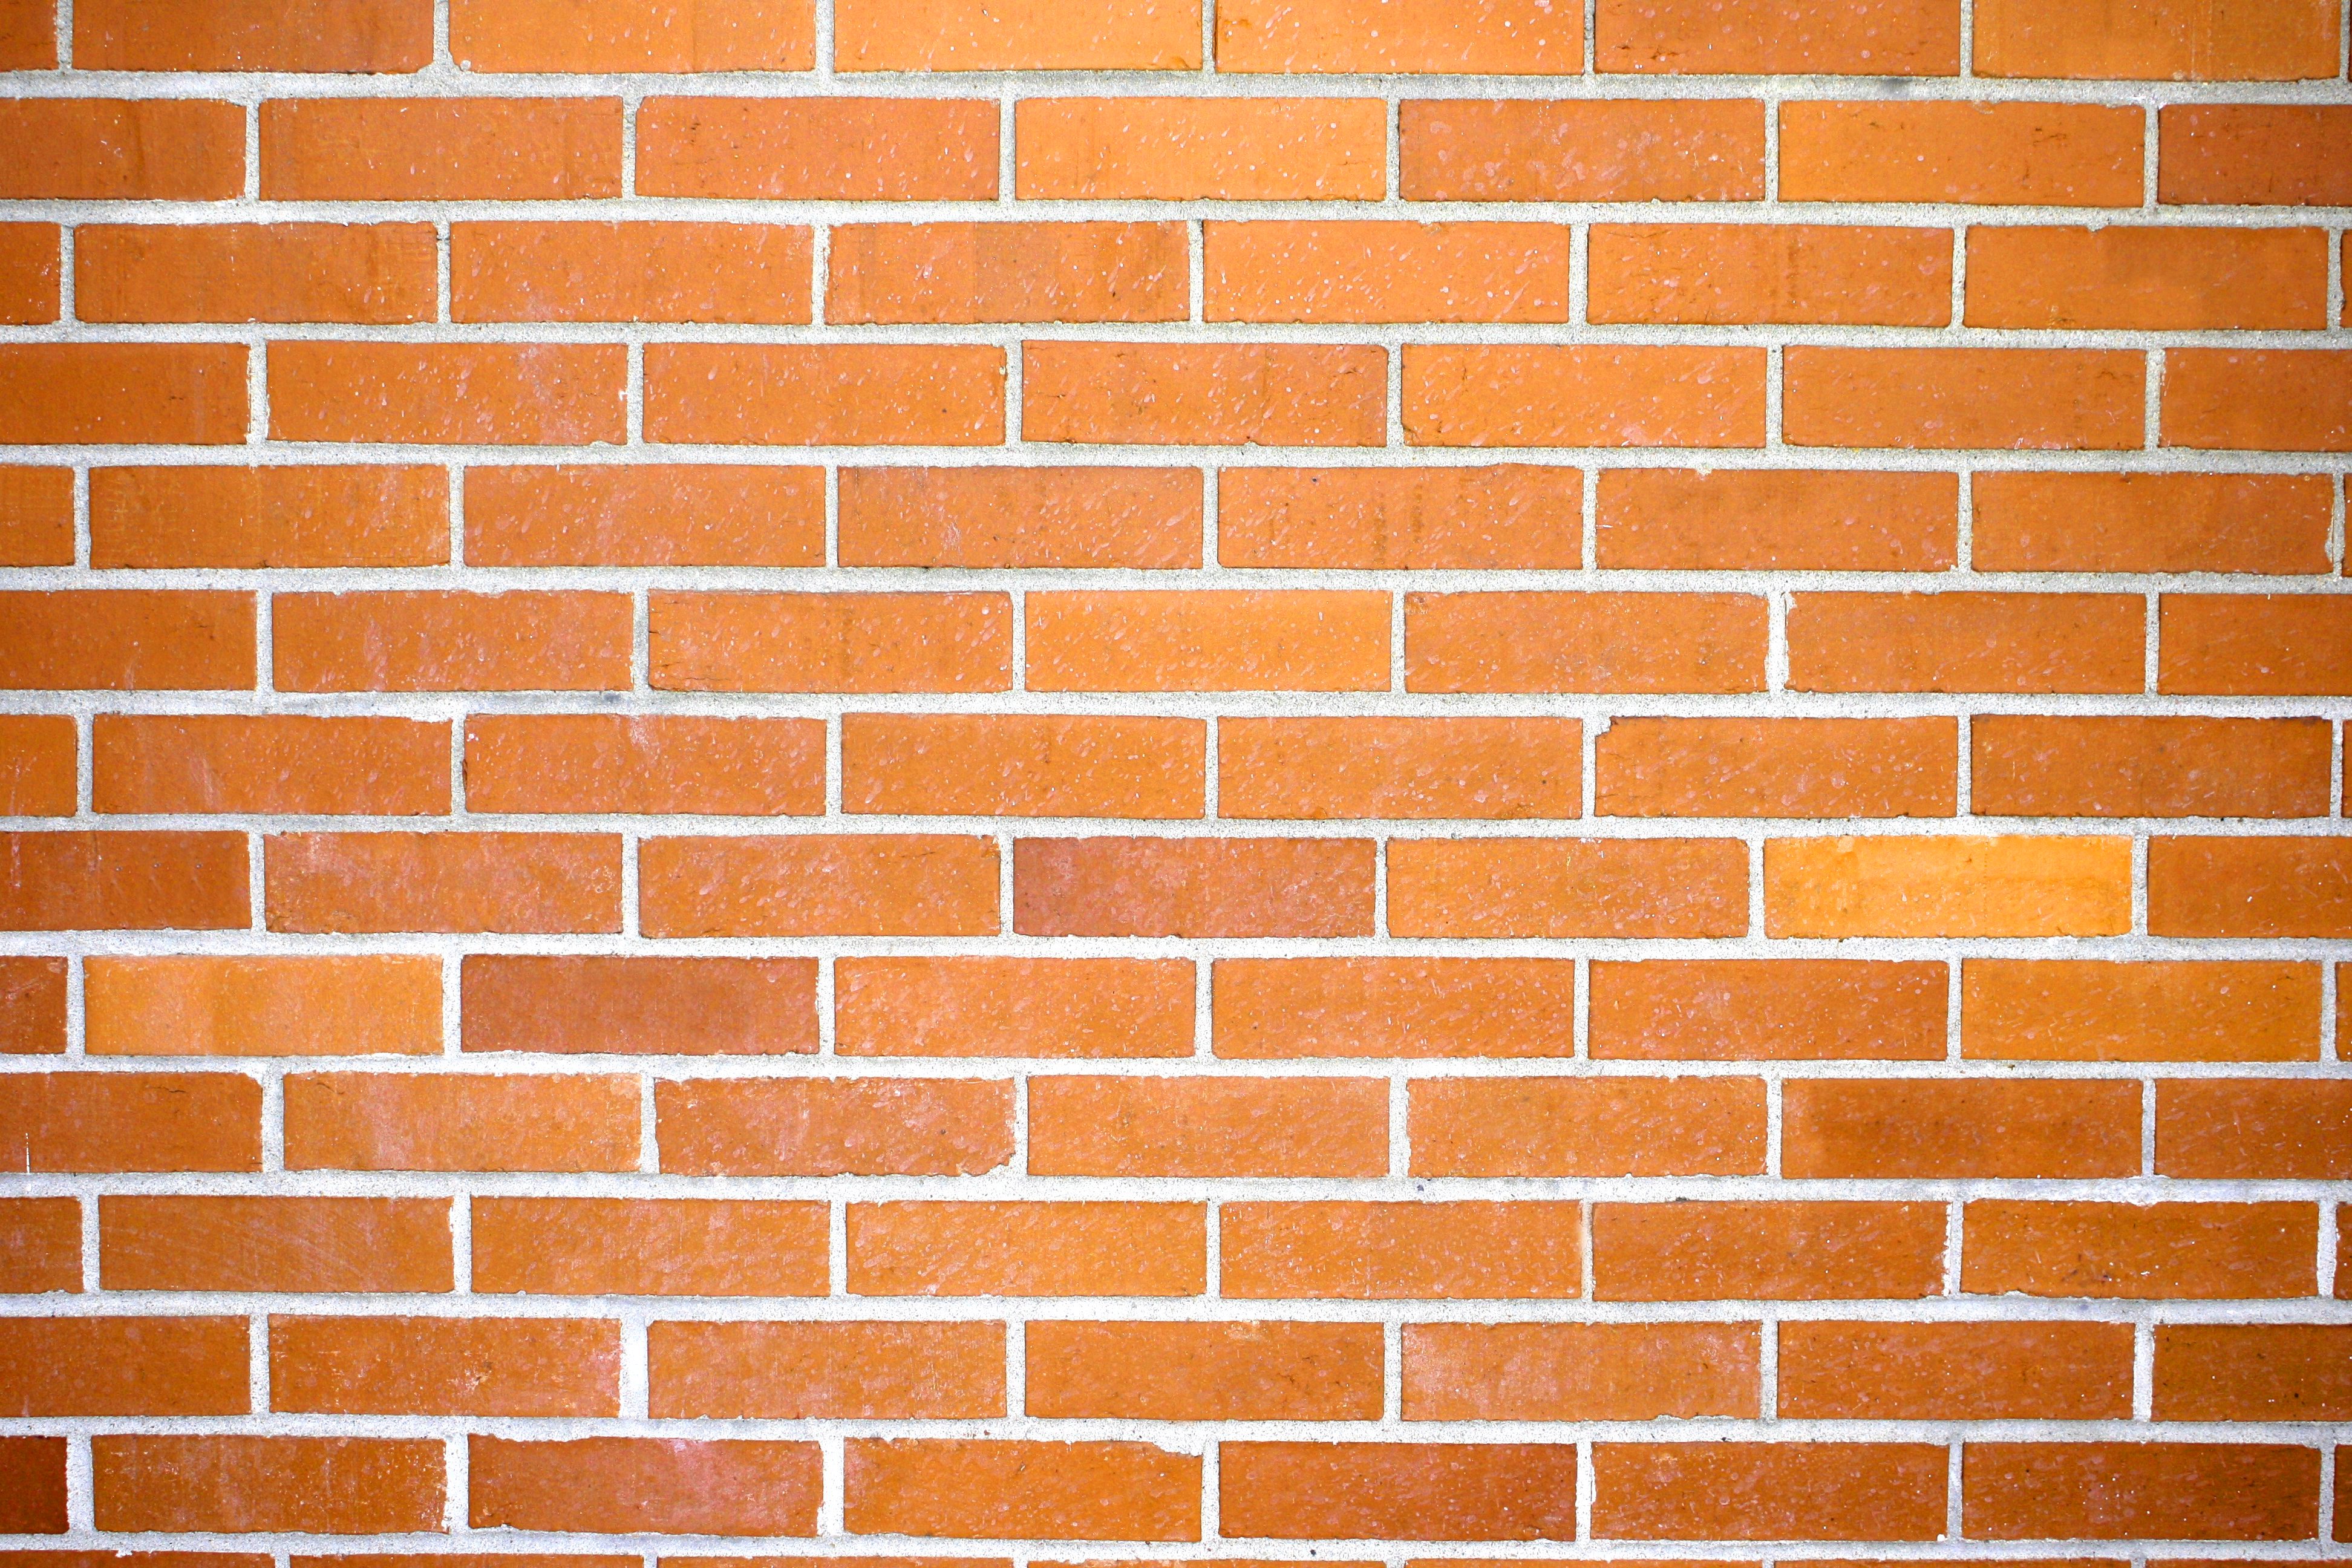 carta da parati in mattoni arancione,muratura,mattone,parete,arancia,linea